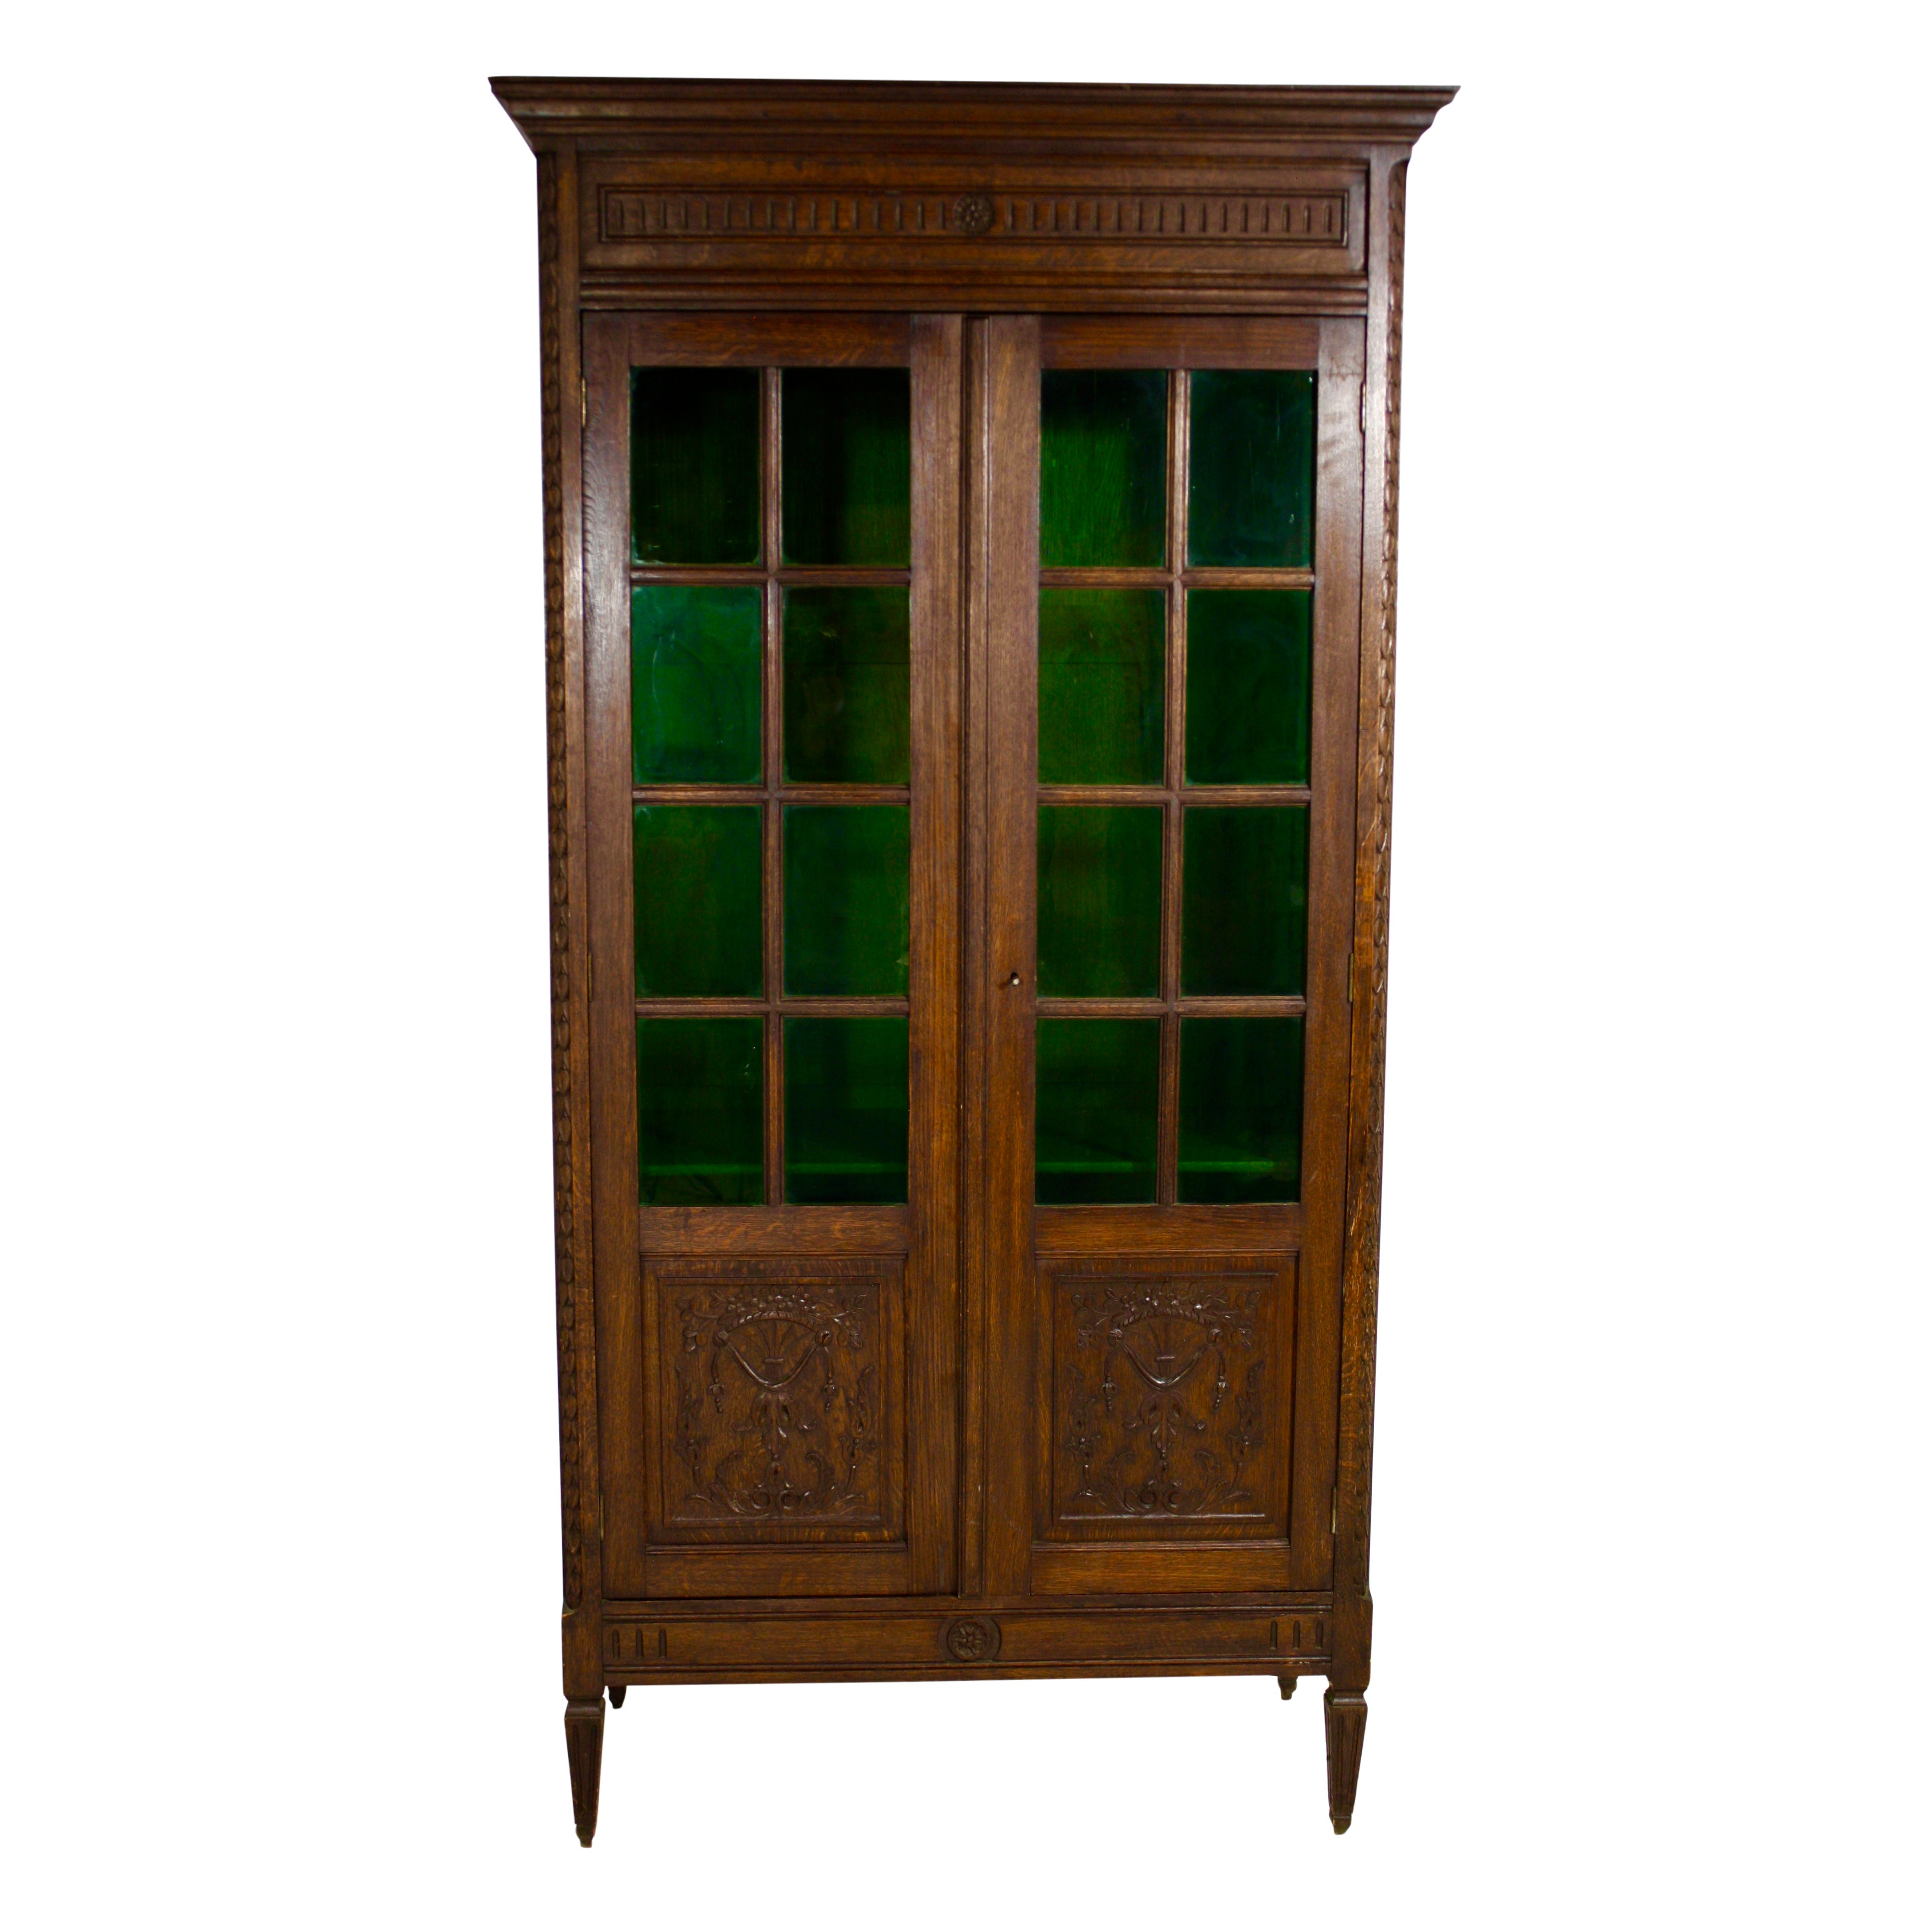 Vitrine with Green Glass Doors